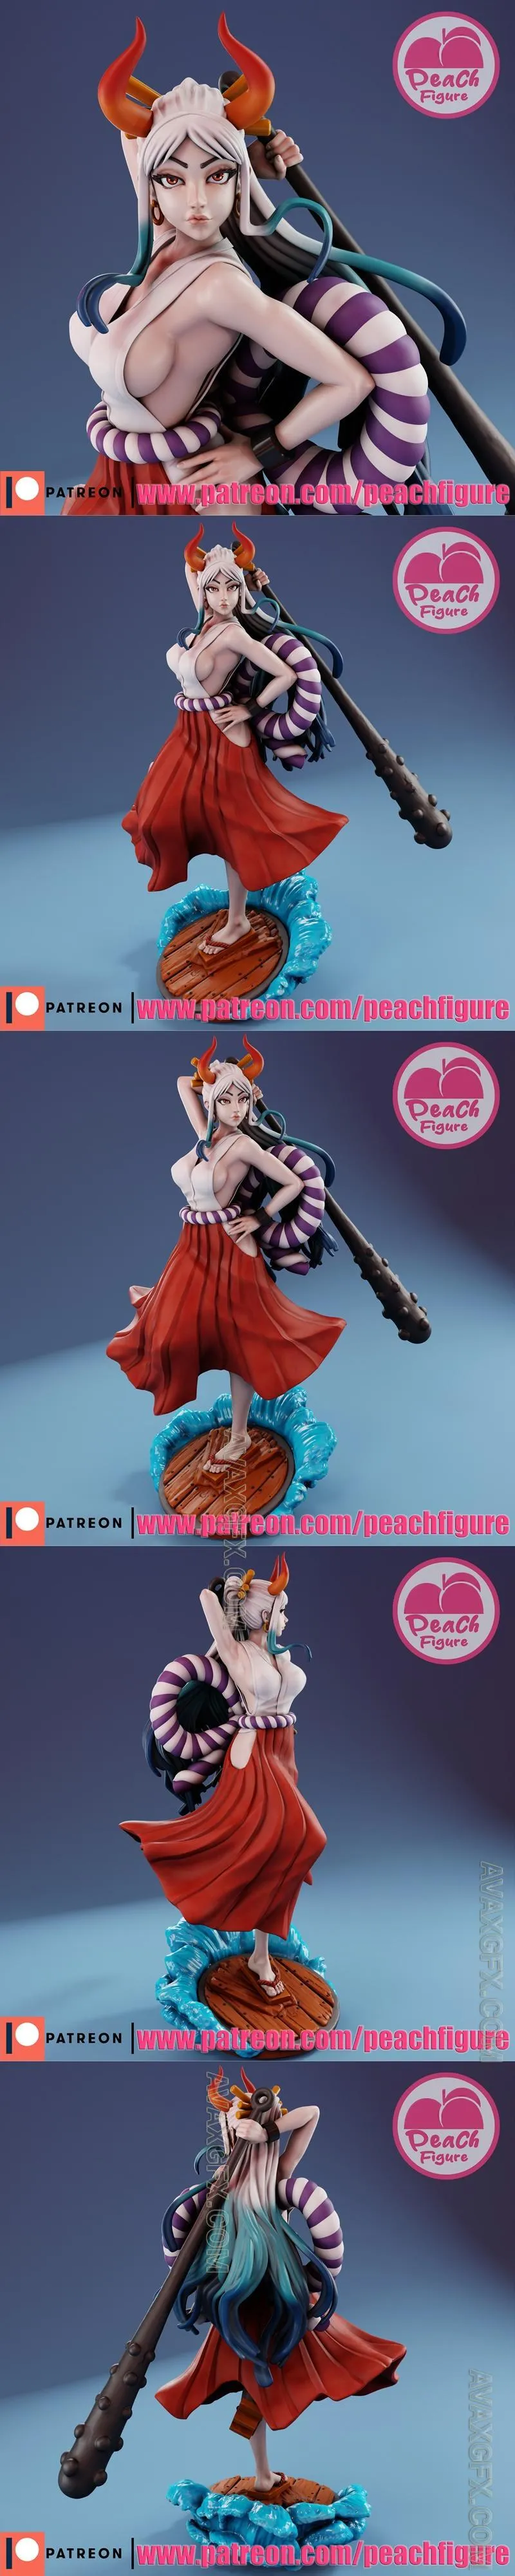 Peach Figure - Yamato One Piece - STL 3D Model